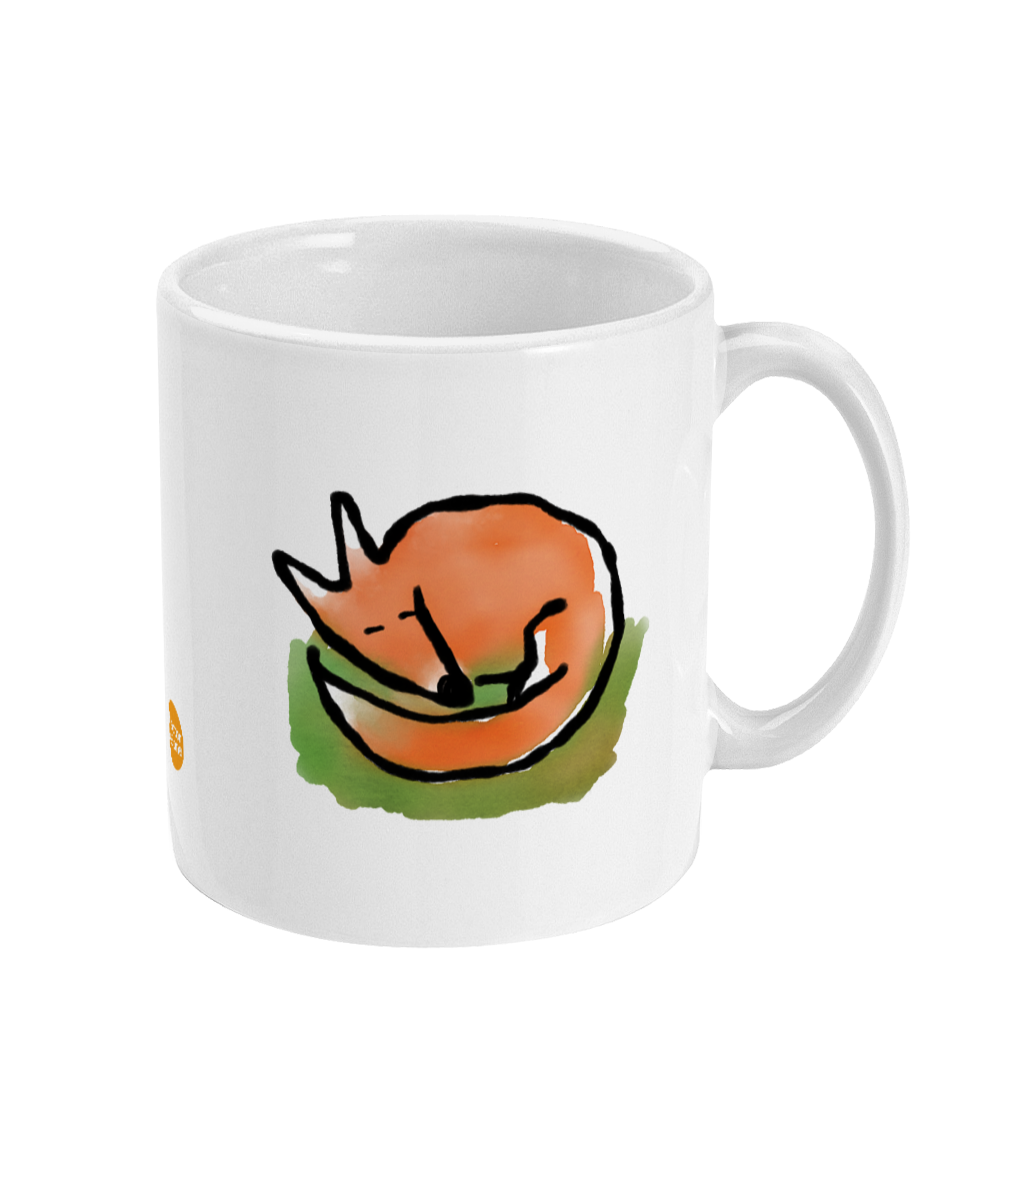 Sleeping Fox Mug - Cute Fox coffee mugs illustrated by Hector and Bone Right View